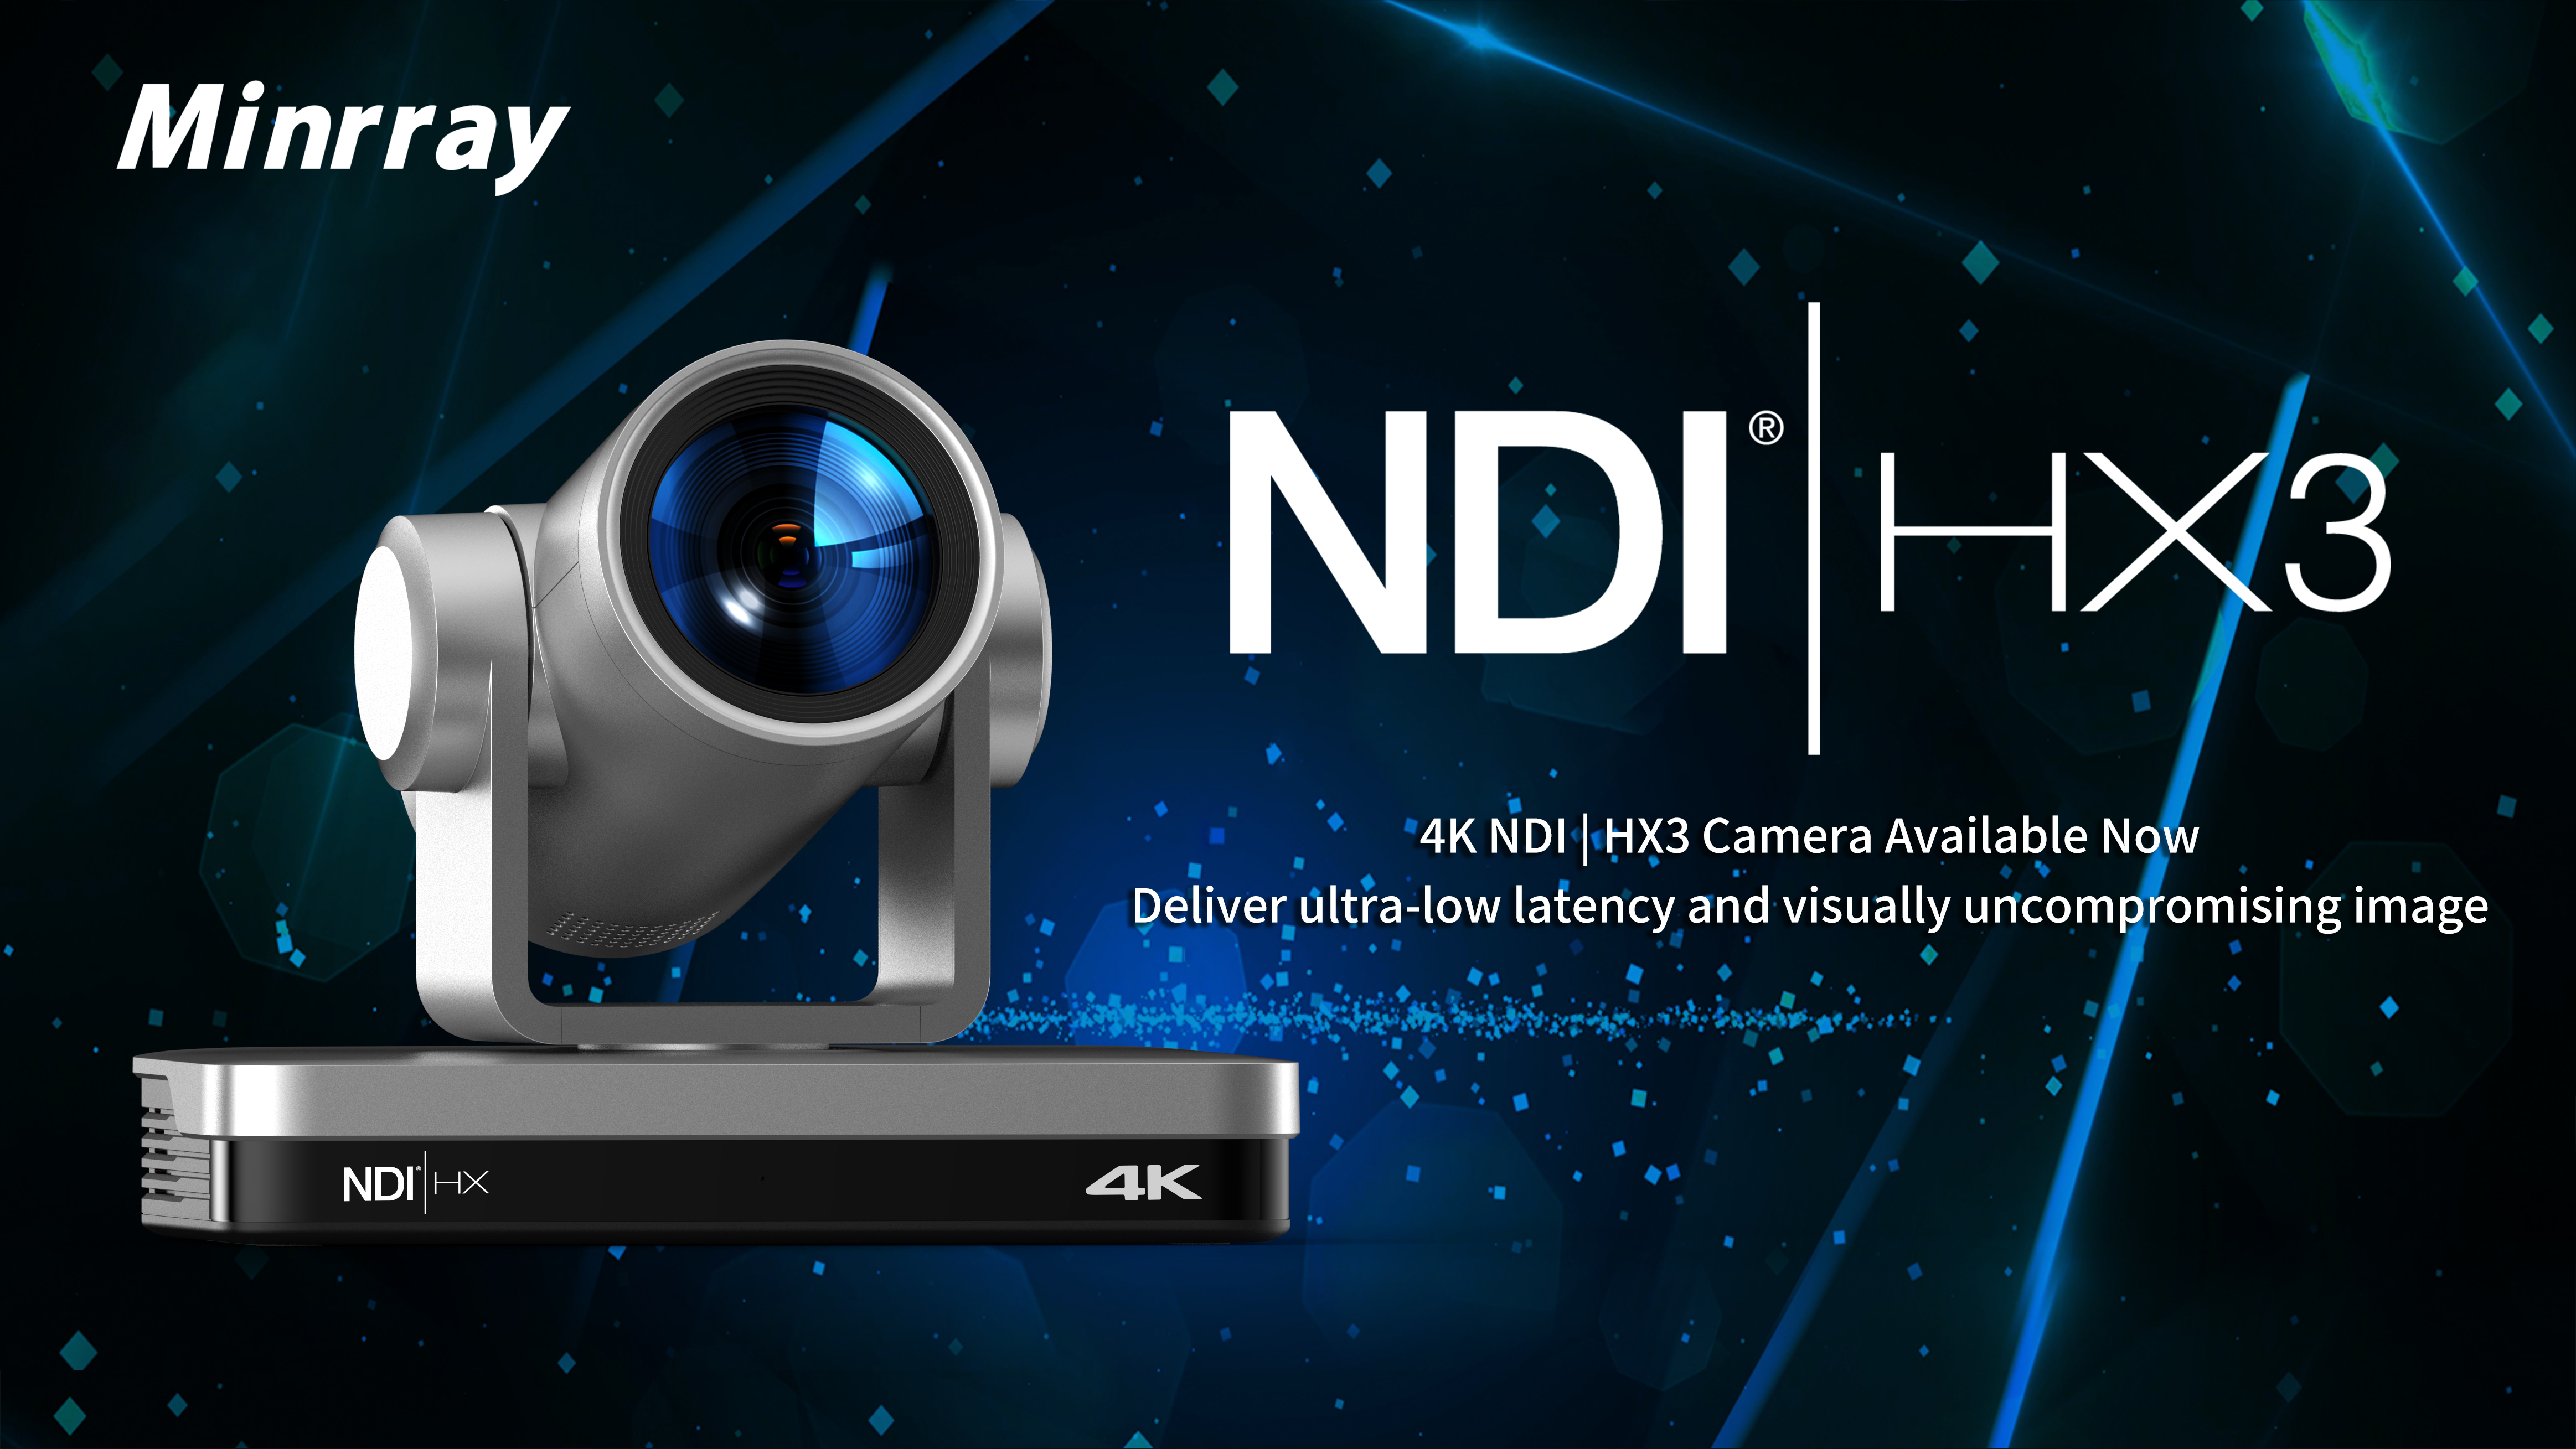 Uuenduslik | Minrray AI-toega PTZ-kaamera sai NDI®| sertifikaadi HX3